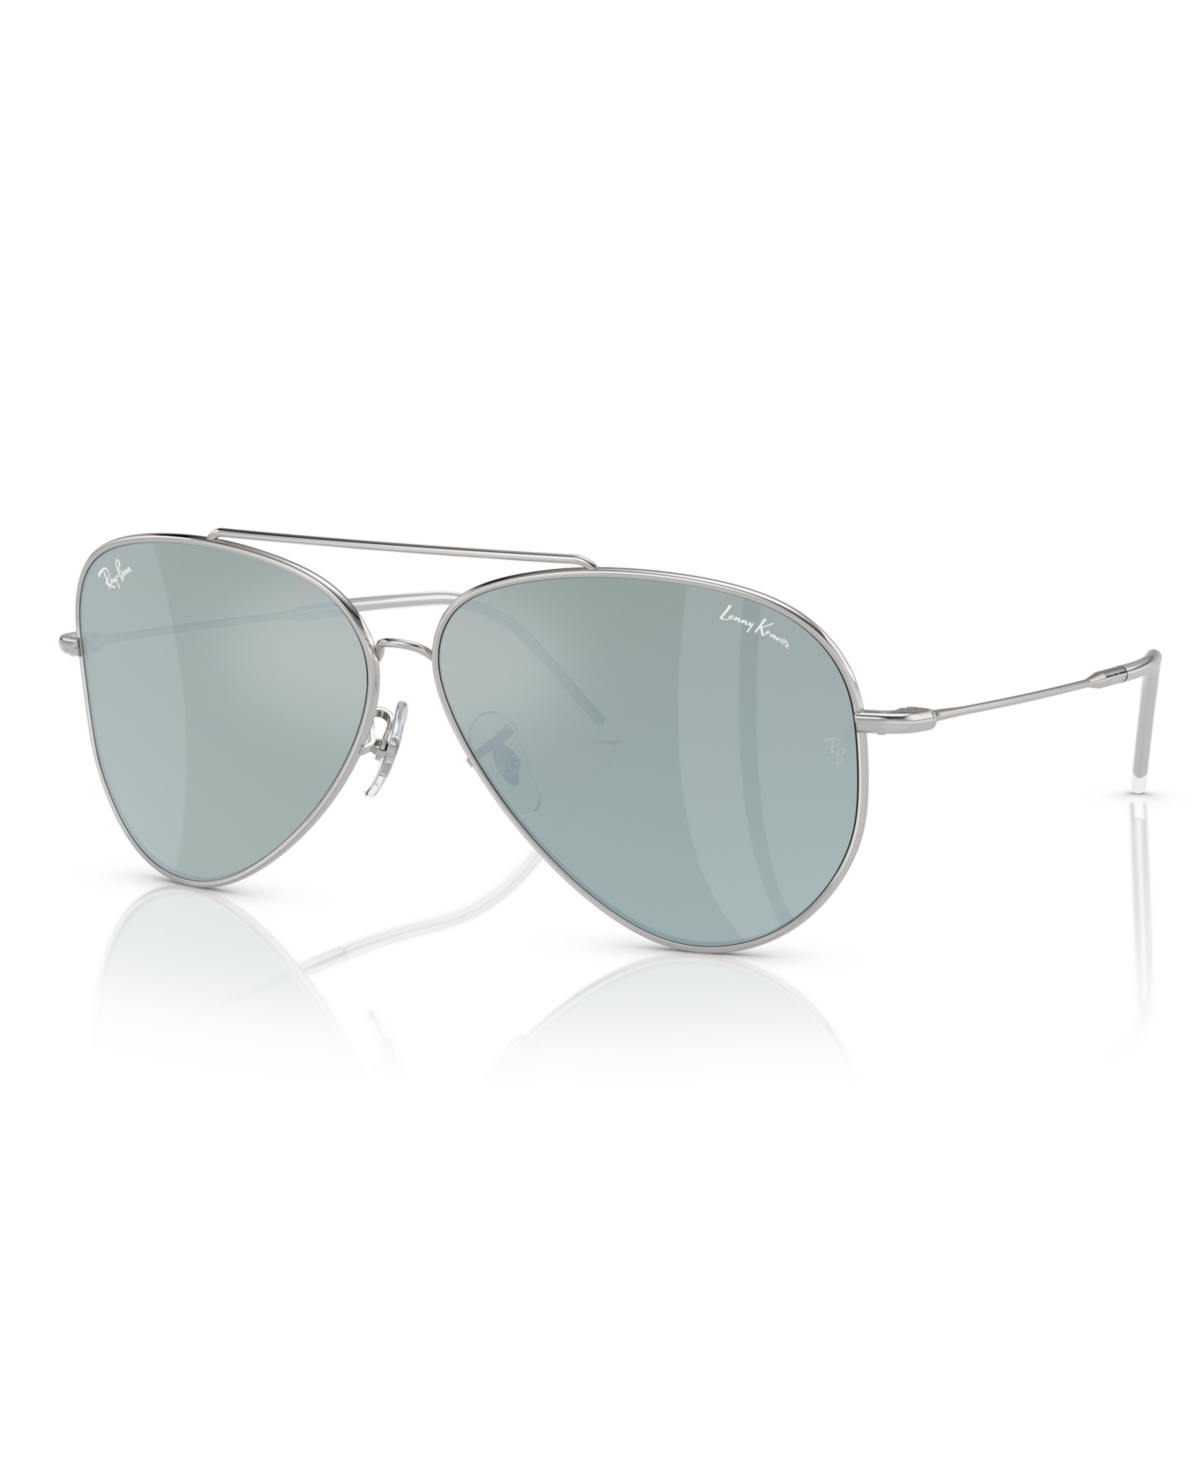 Unisex Sunglasses, Aviator Reverse RBR0101 - Silver